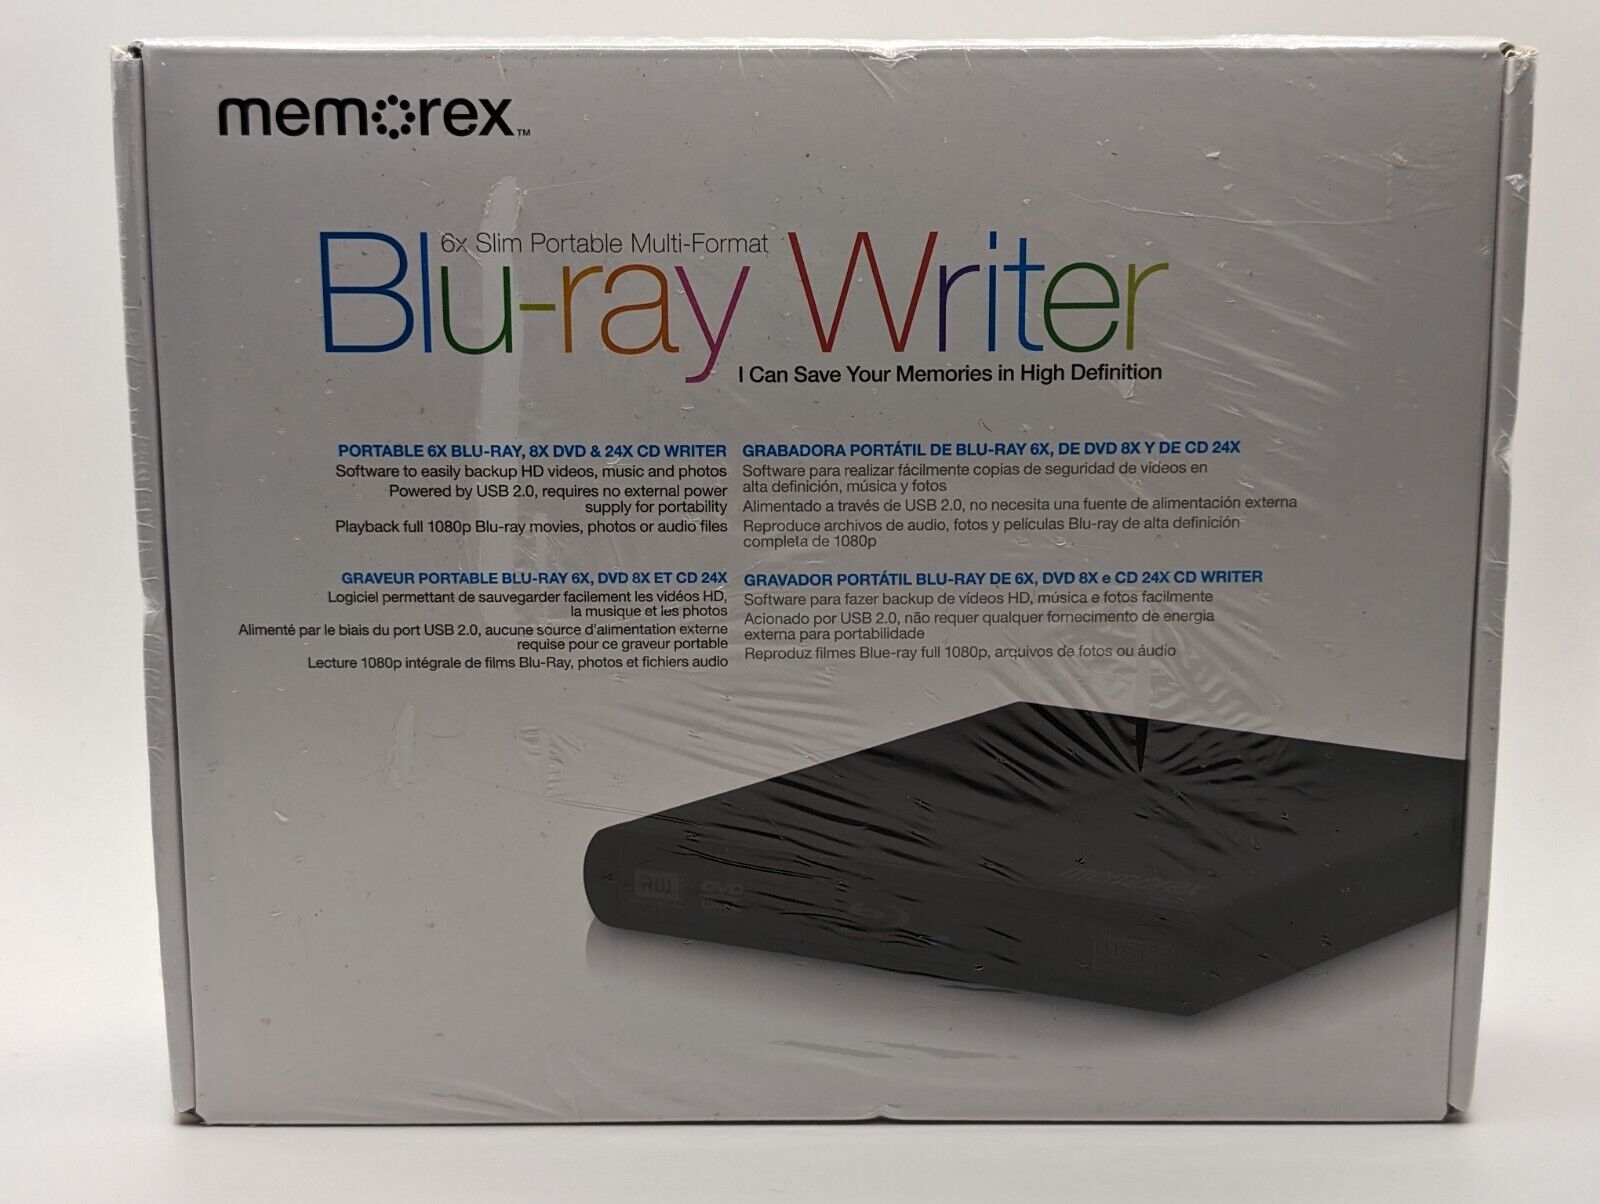 Memorex - Slim Portable Multi-Format 6x Blu-Ray Writer, New in Box